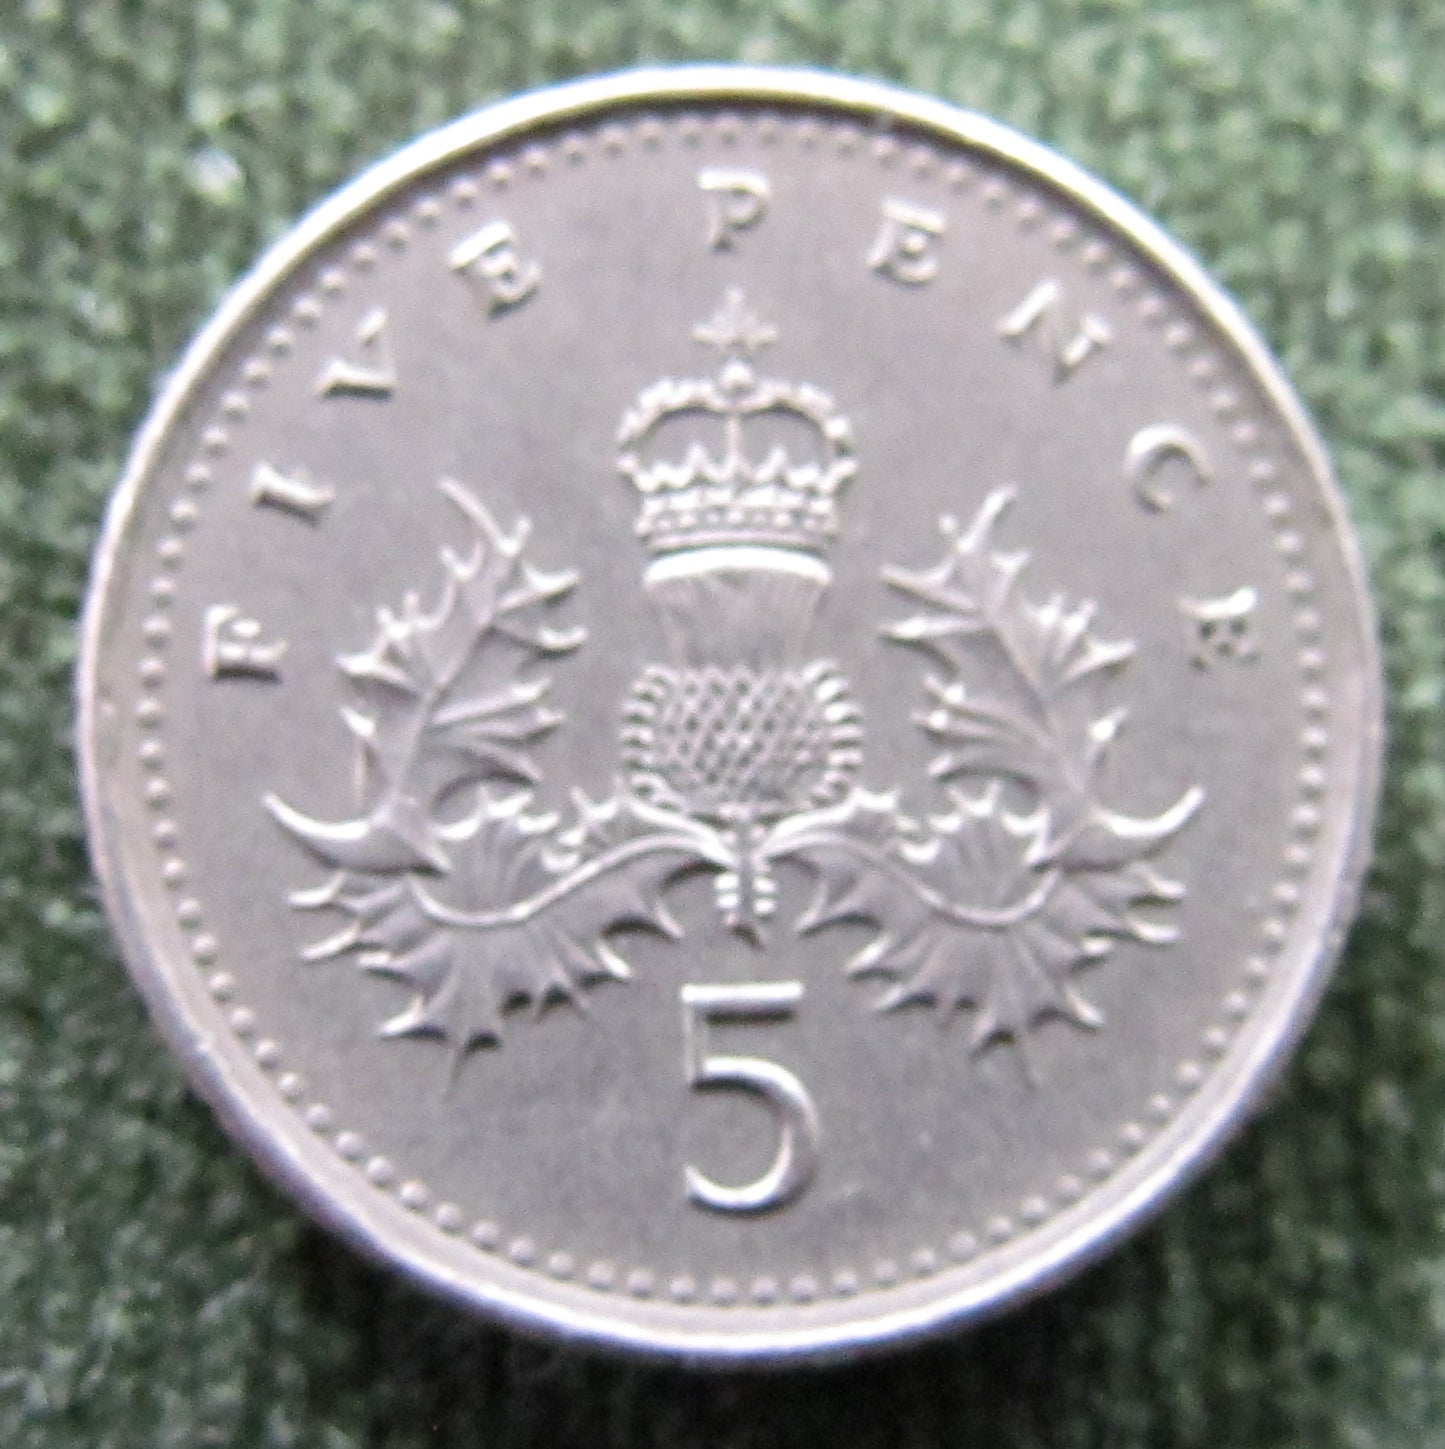 GB British UK English 1992 5 New Pence Queen Elizabeth II Coin